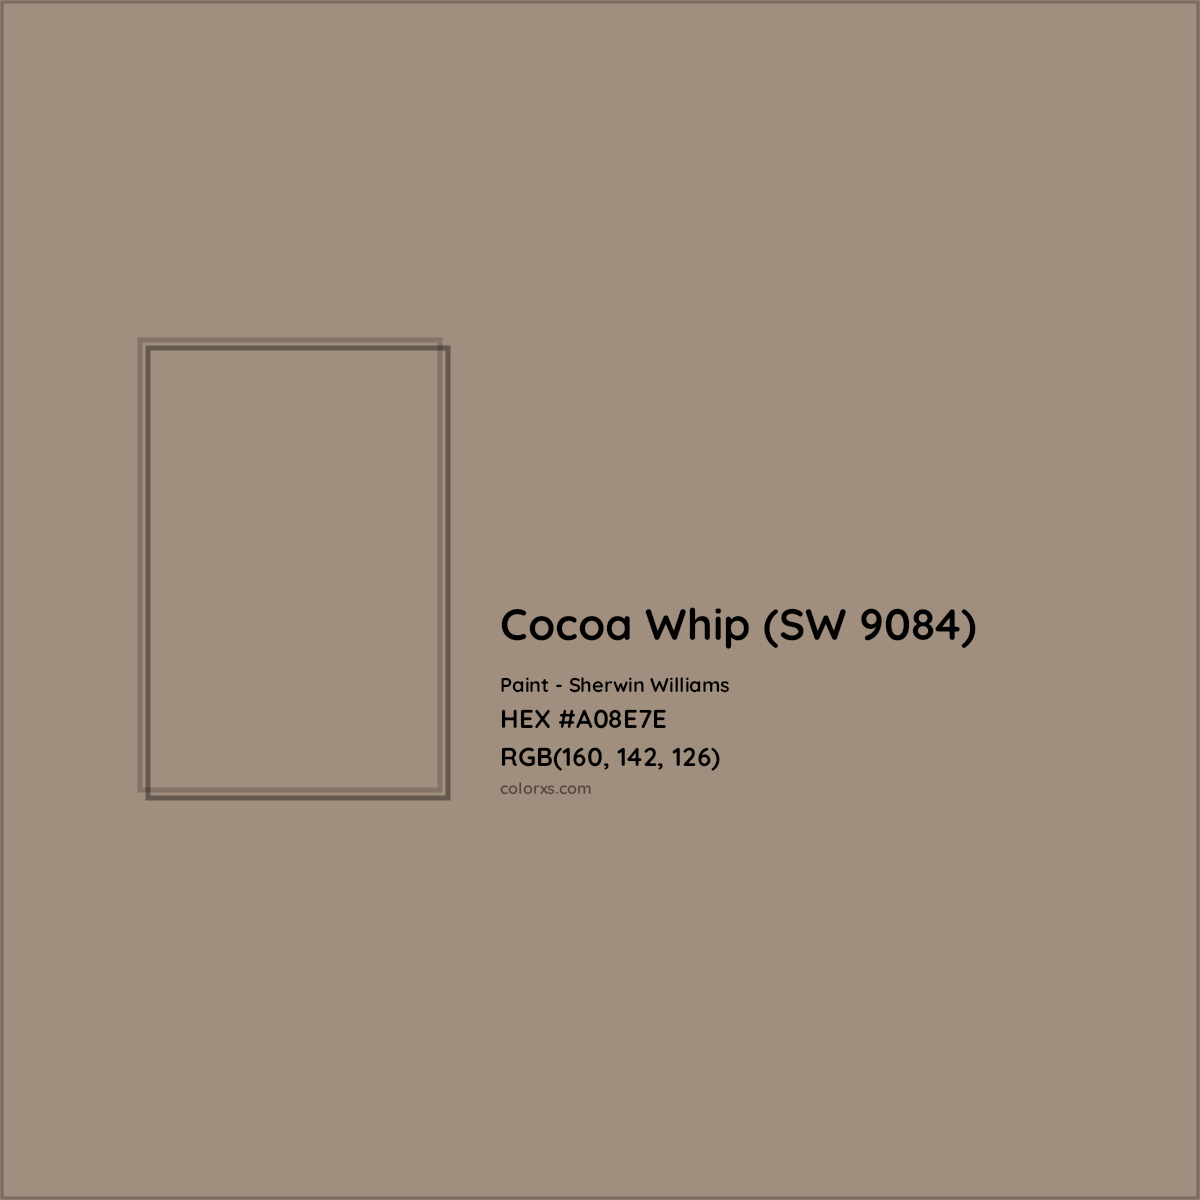 HEX #A08E7E Cocoa Whip (SW 9084) Paint Sherwin Williams - Color Code